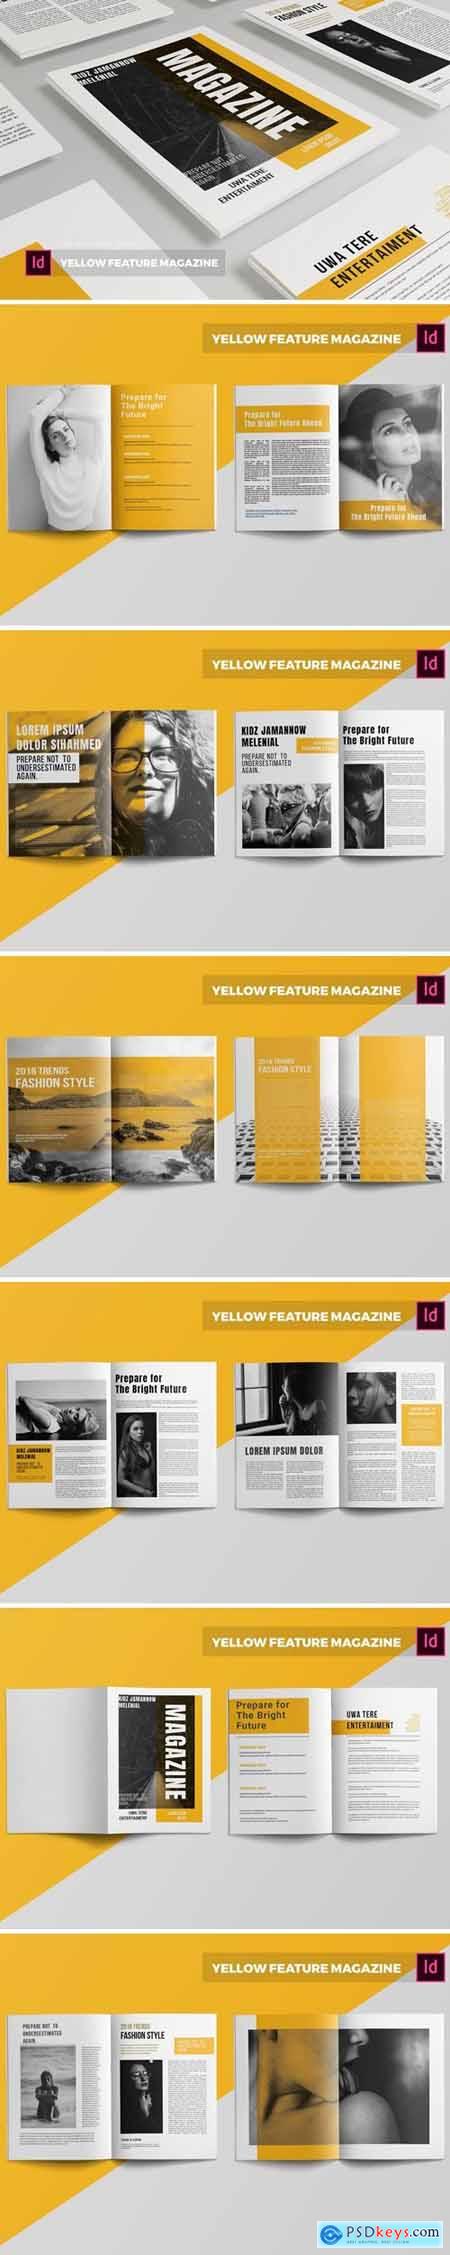 Yellow Future Magazine Template